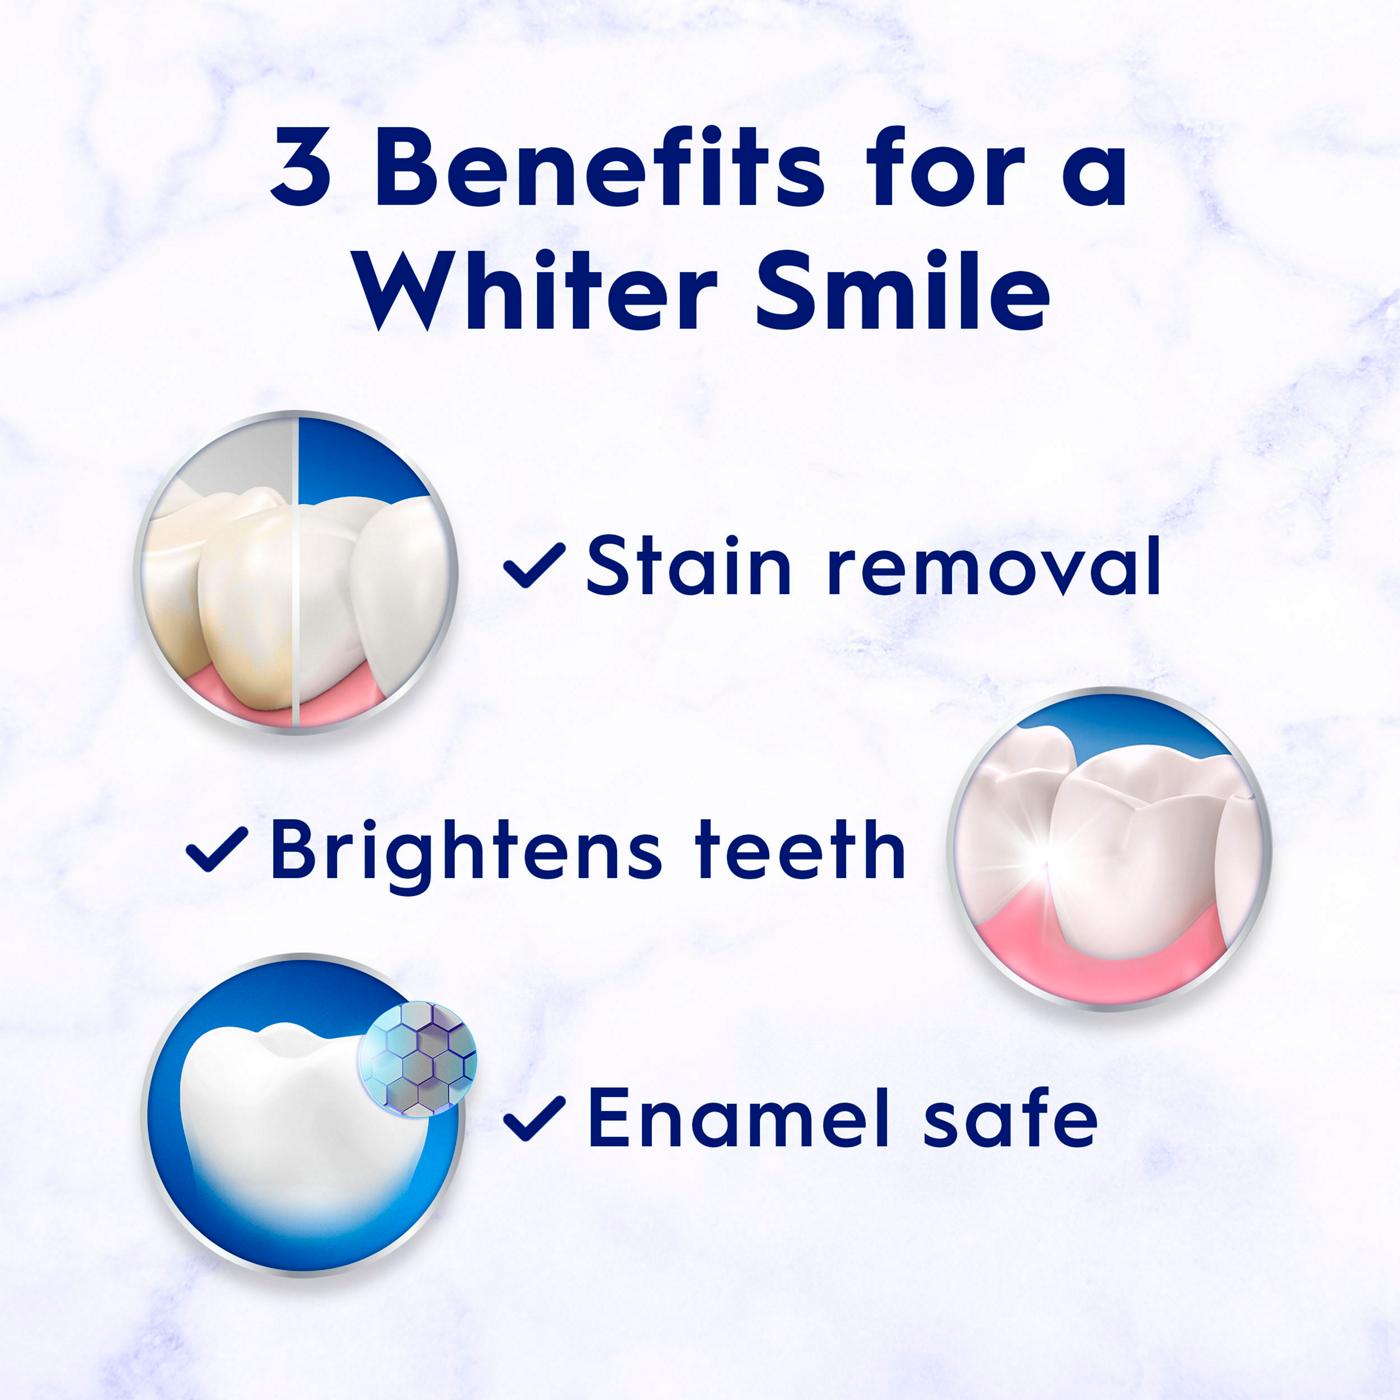 Crest 3D White Whitening Toothpaste - Glamorous White; image 8 of 8